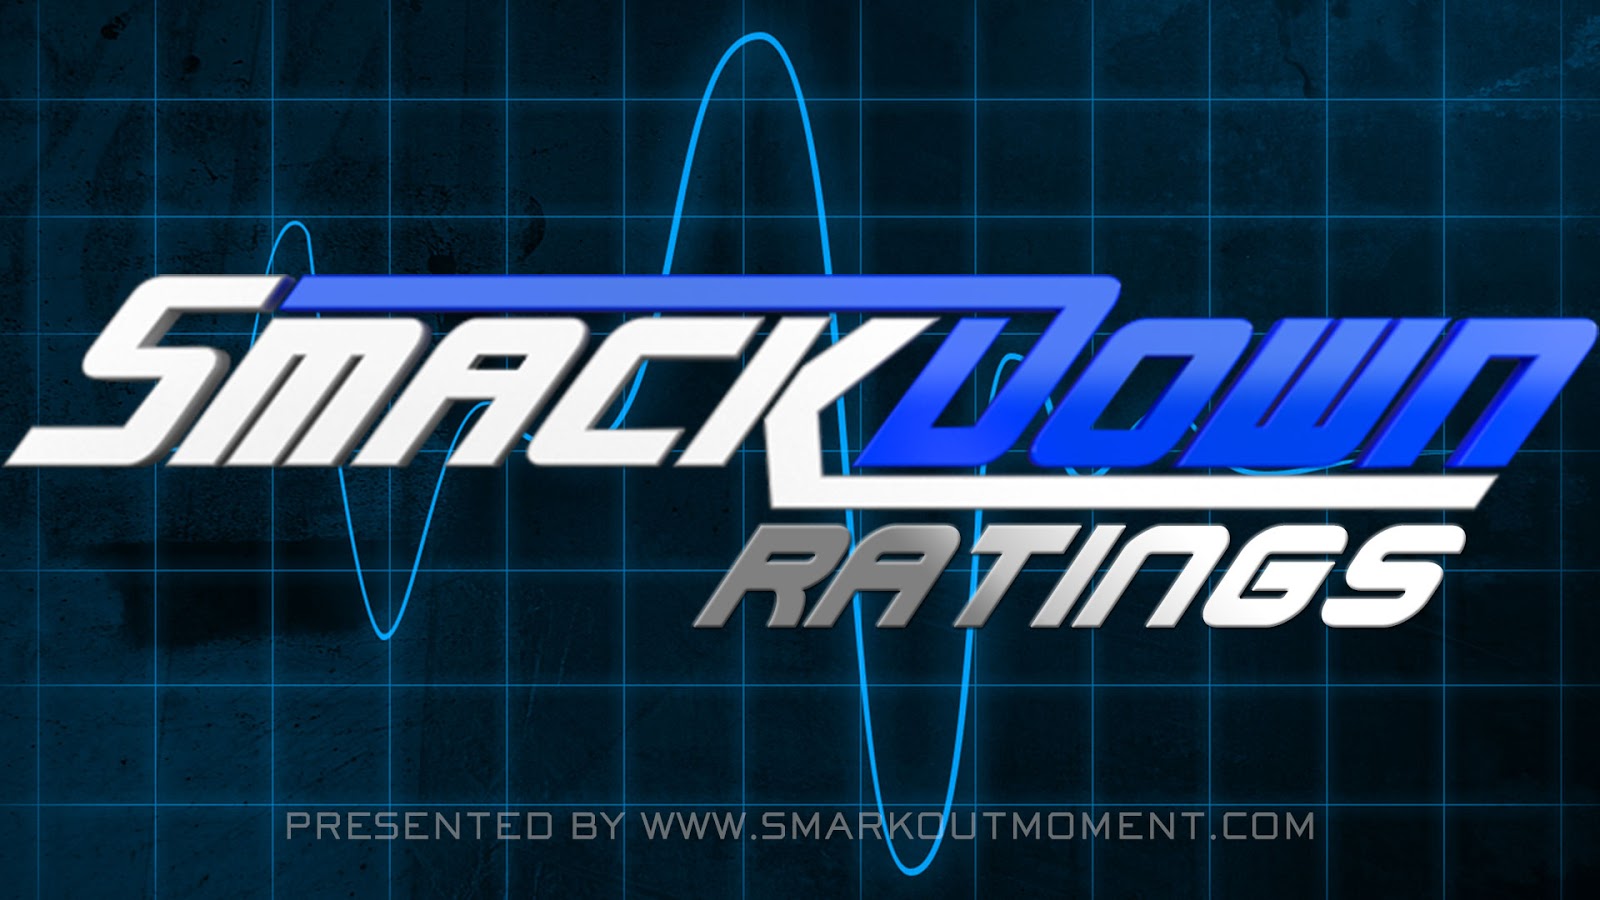 WWE SmackDown TV ratings